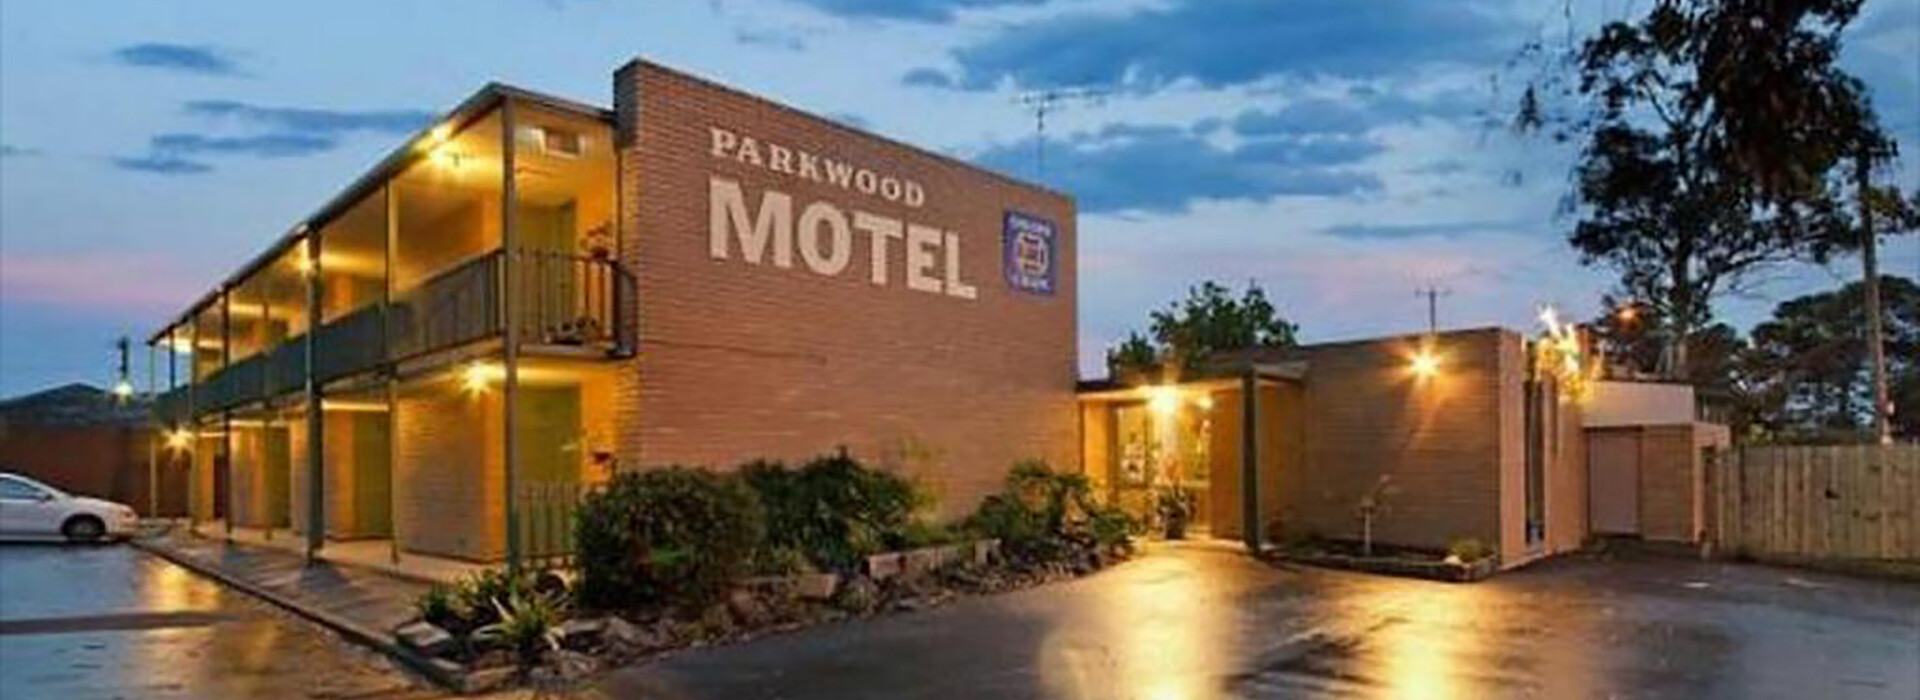 Parkwood Motel & Apartments